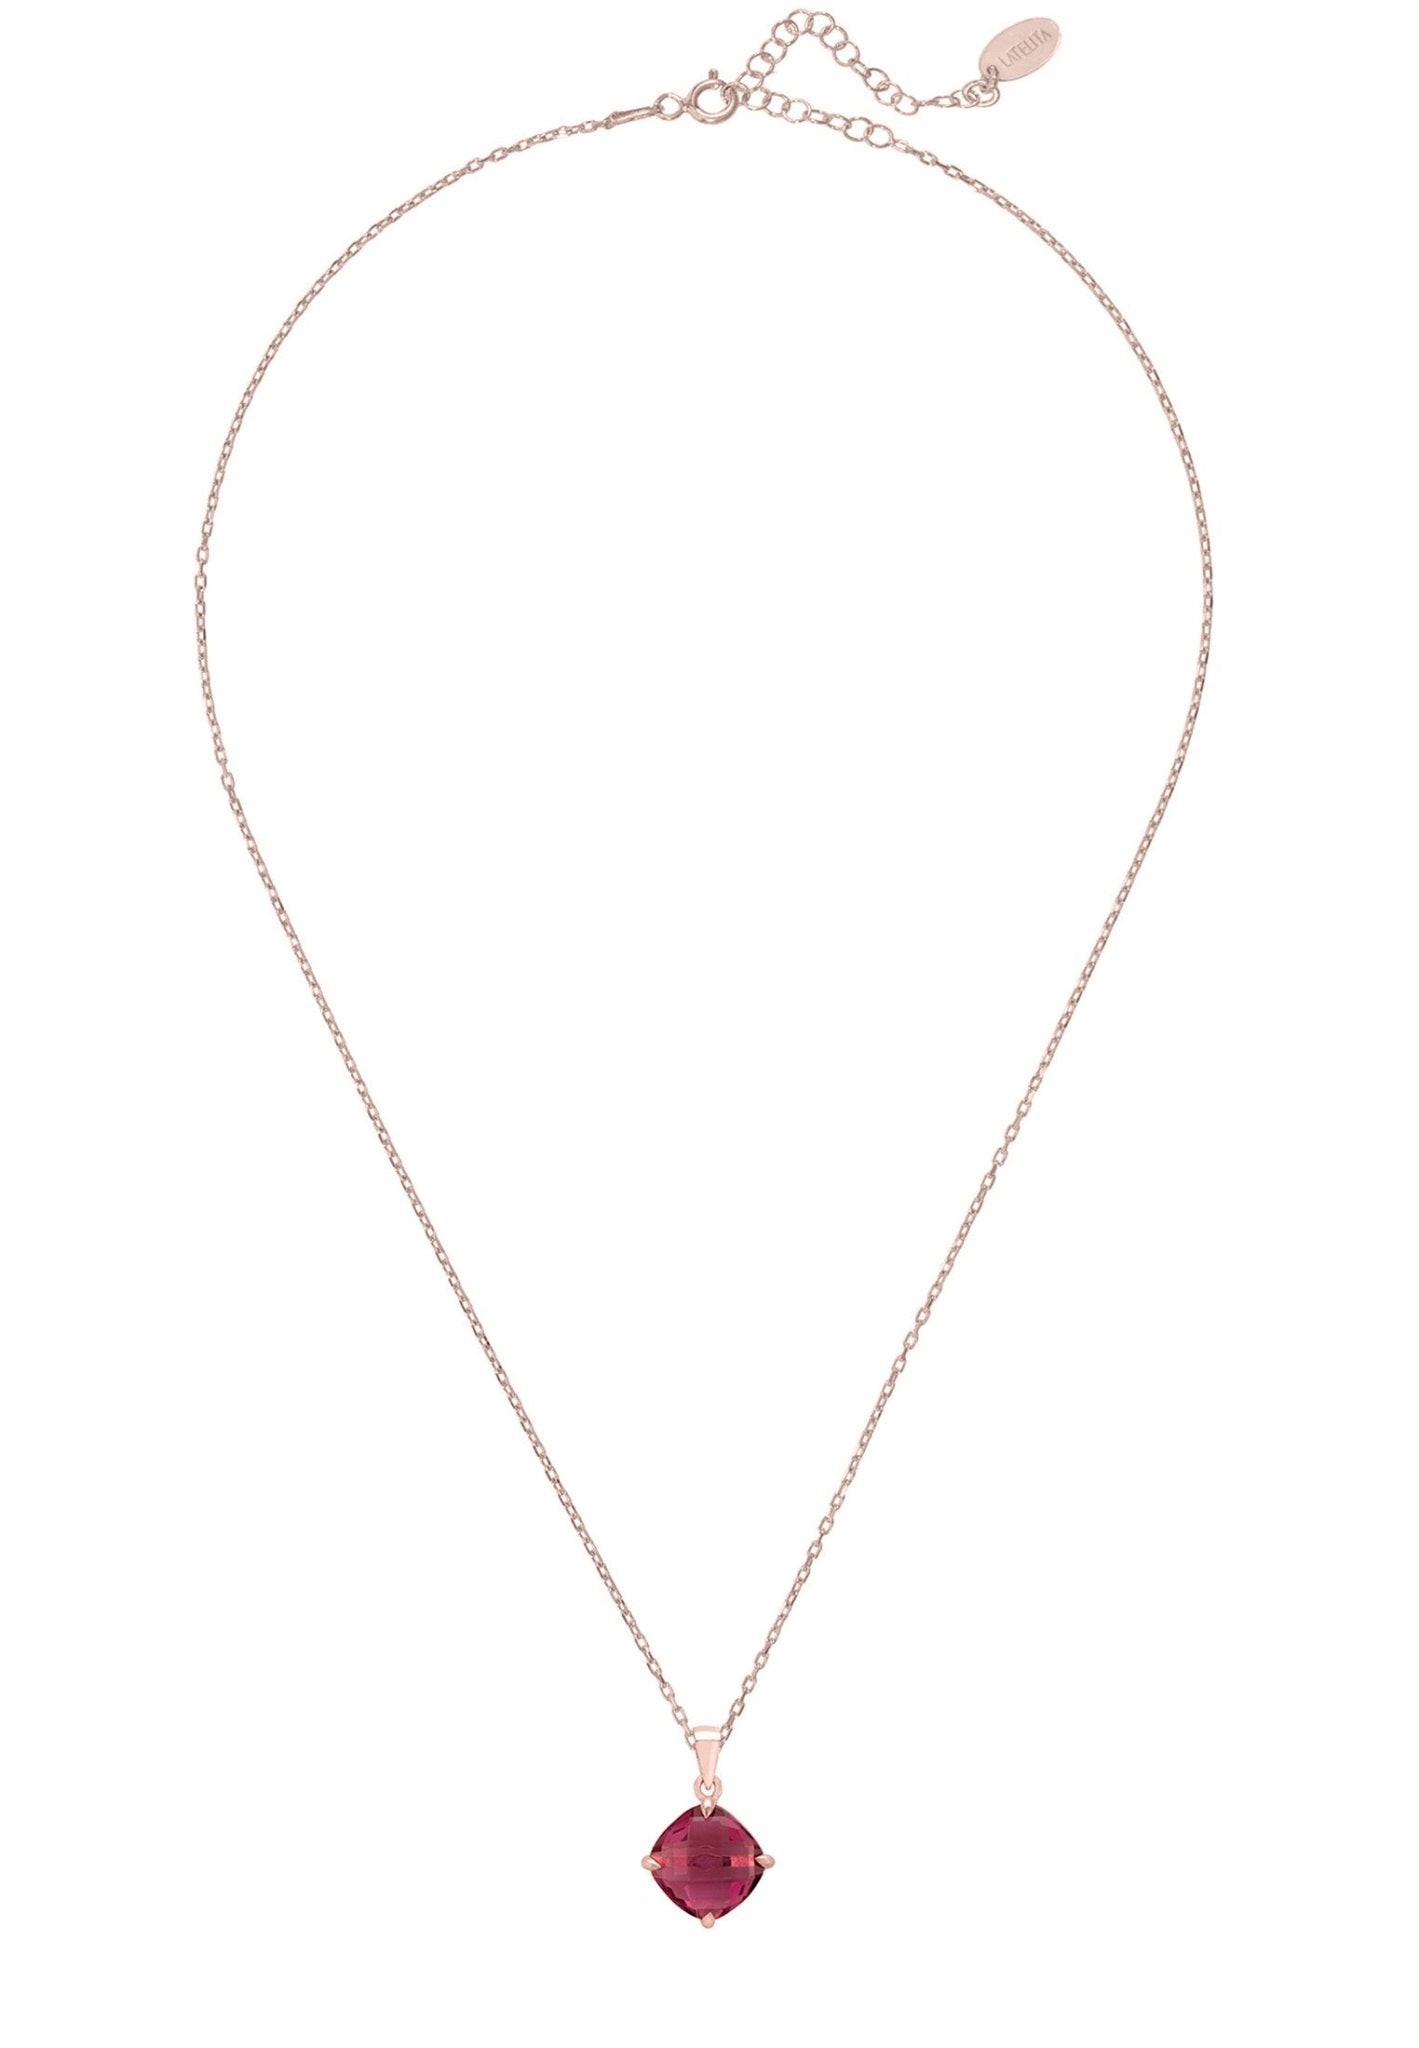 Empress Pink Tourmaline Gemstone Necklace Rosegold - LATELITA Necklaces